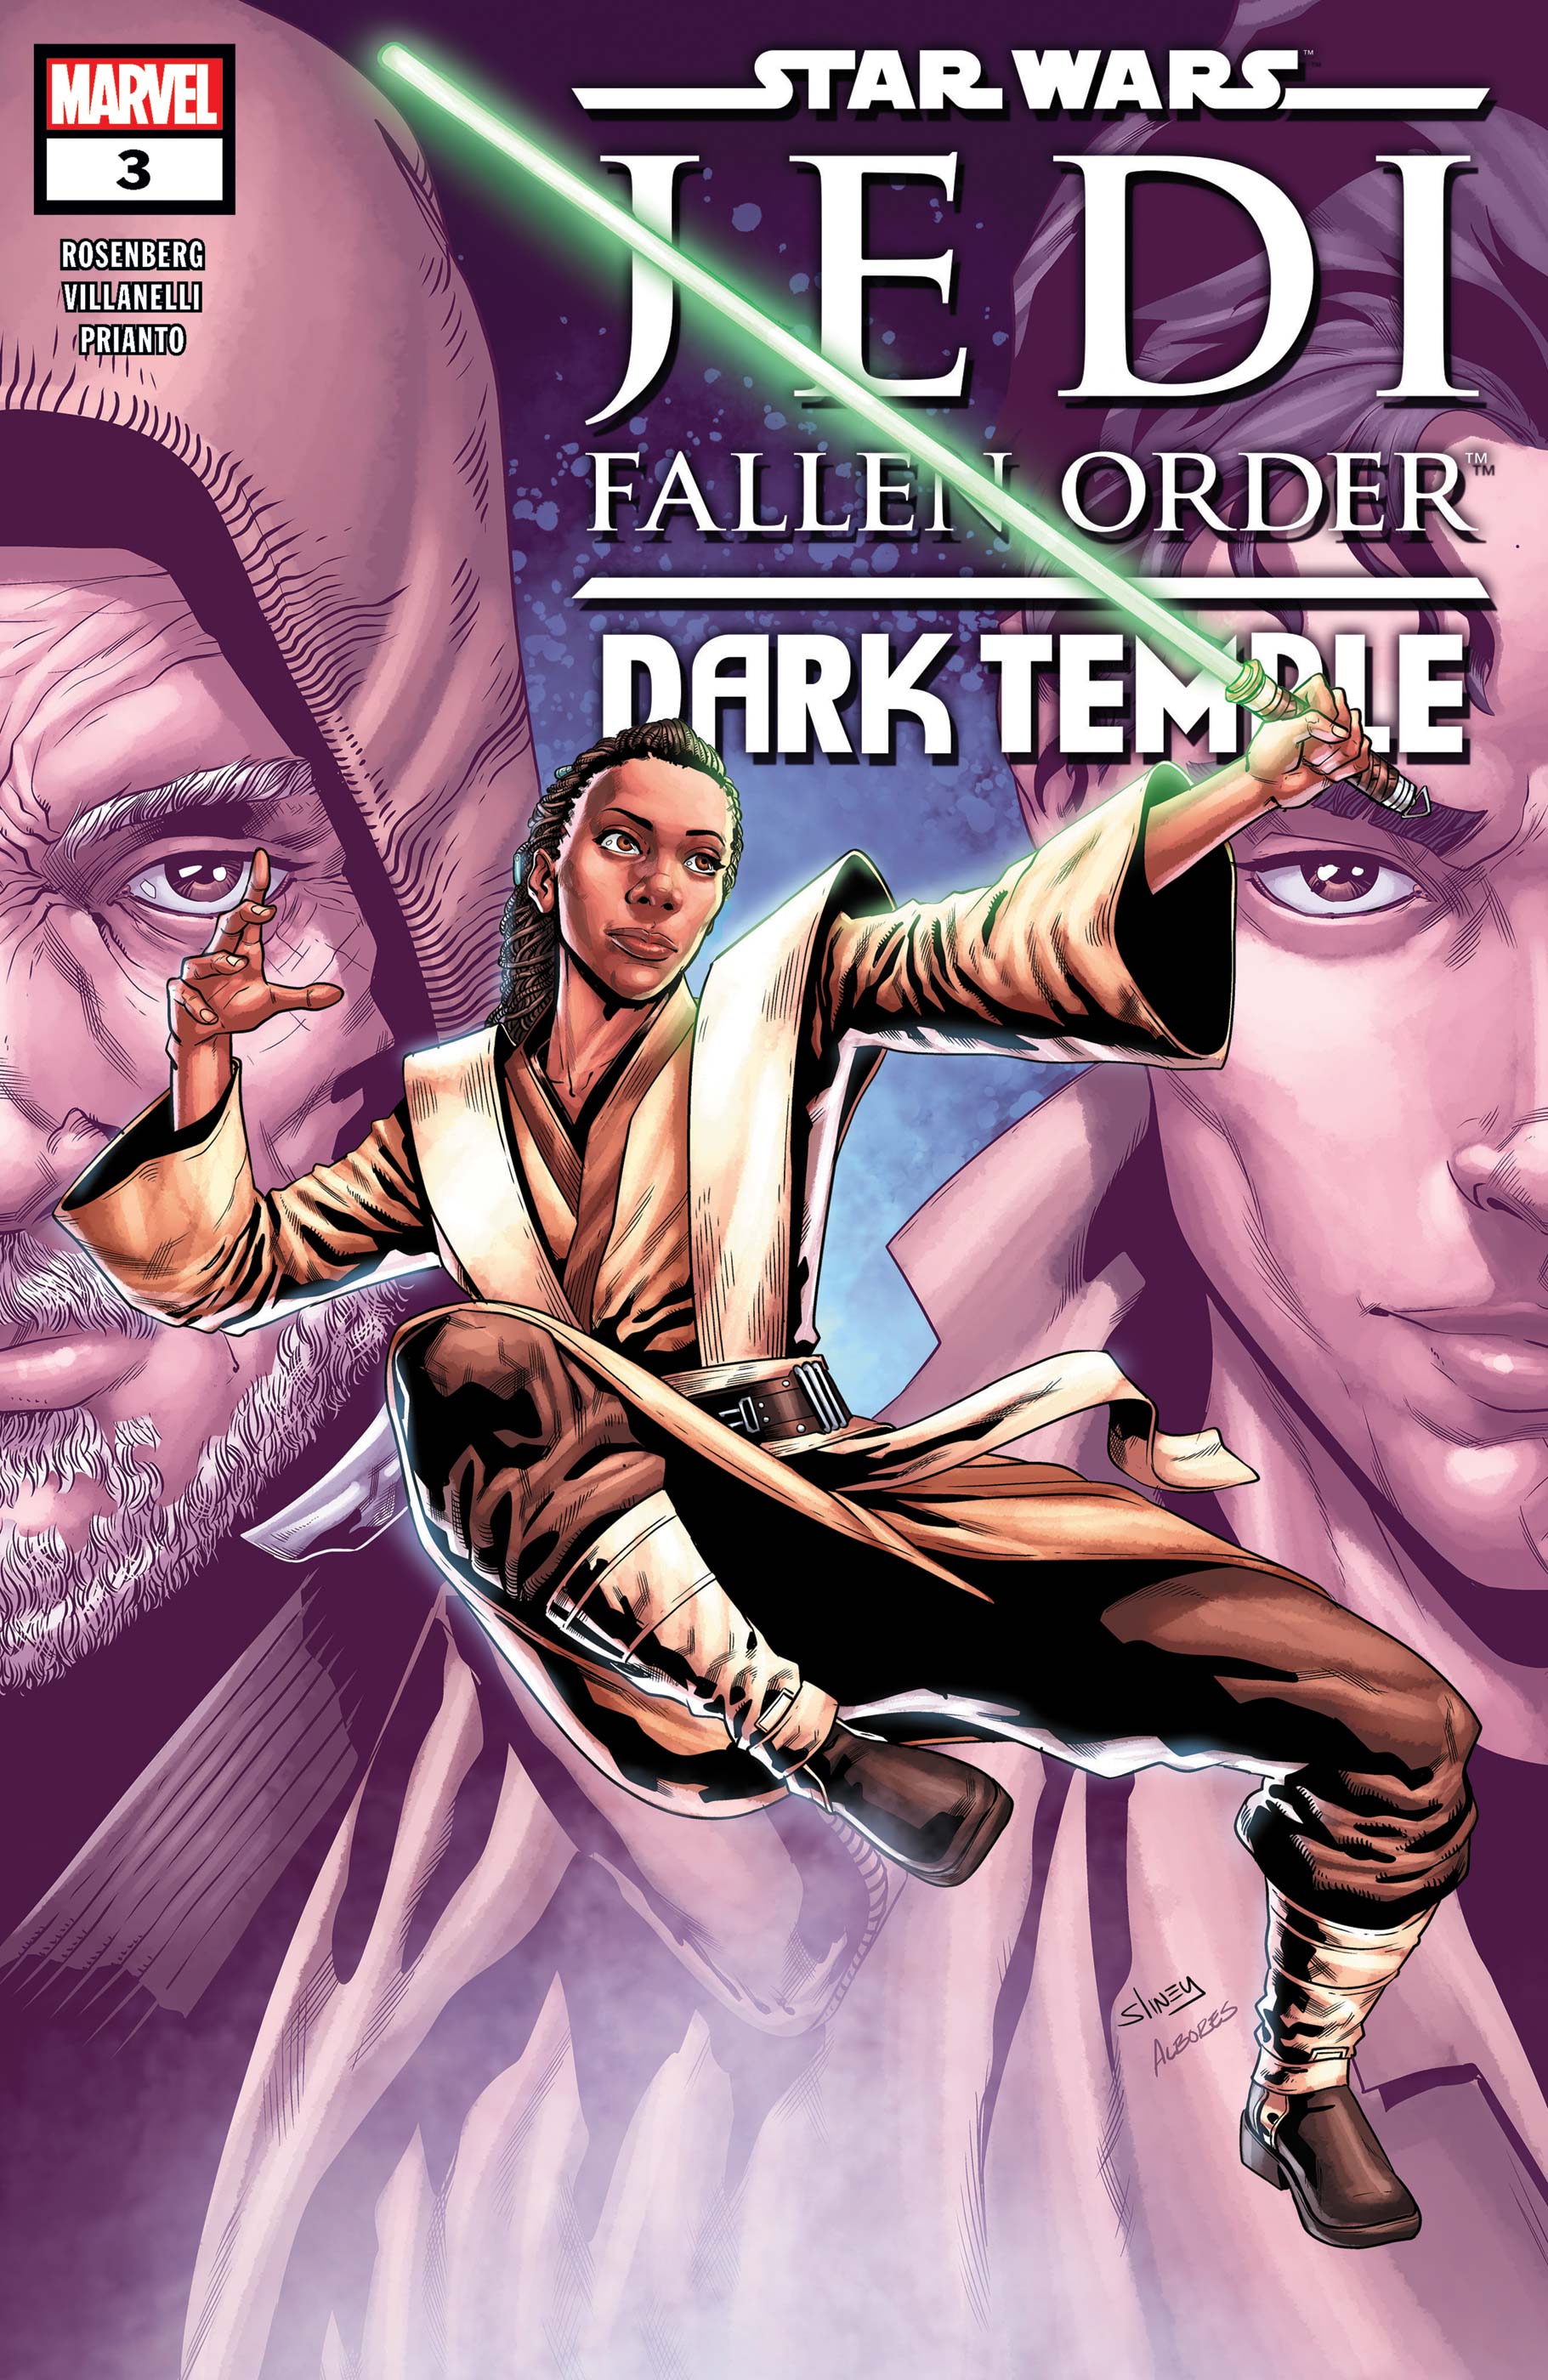 Star Wars: Jedi Fallen Order - Dark Temple (2019) #3